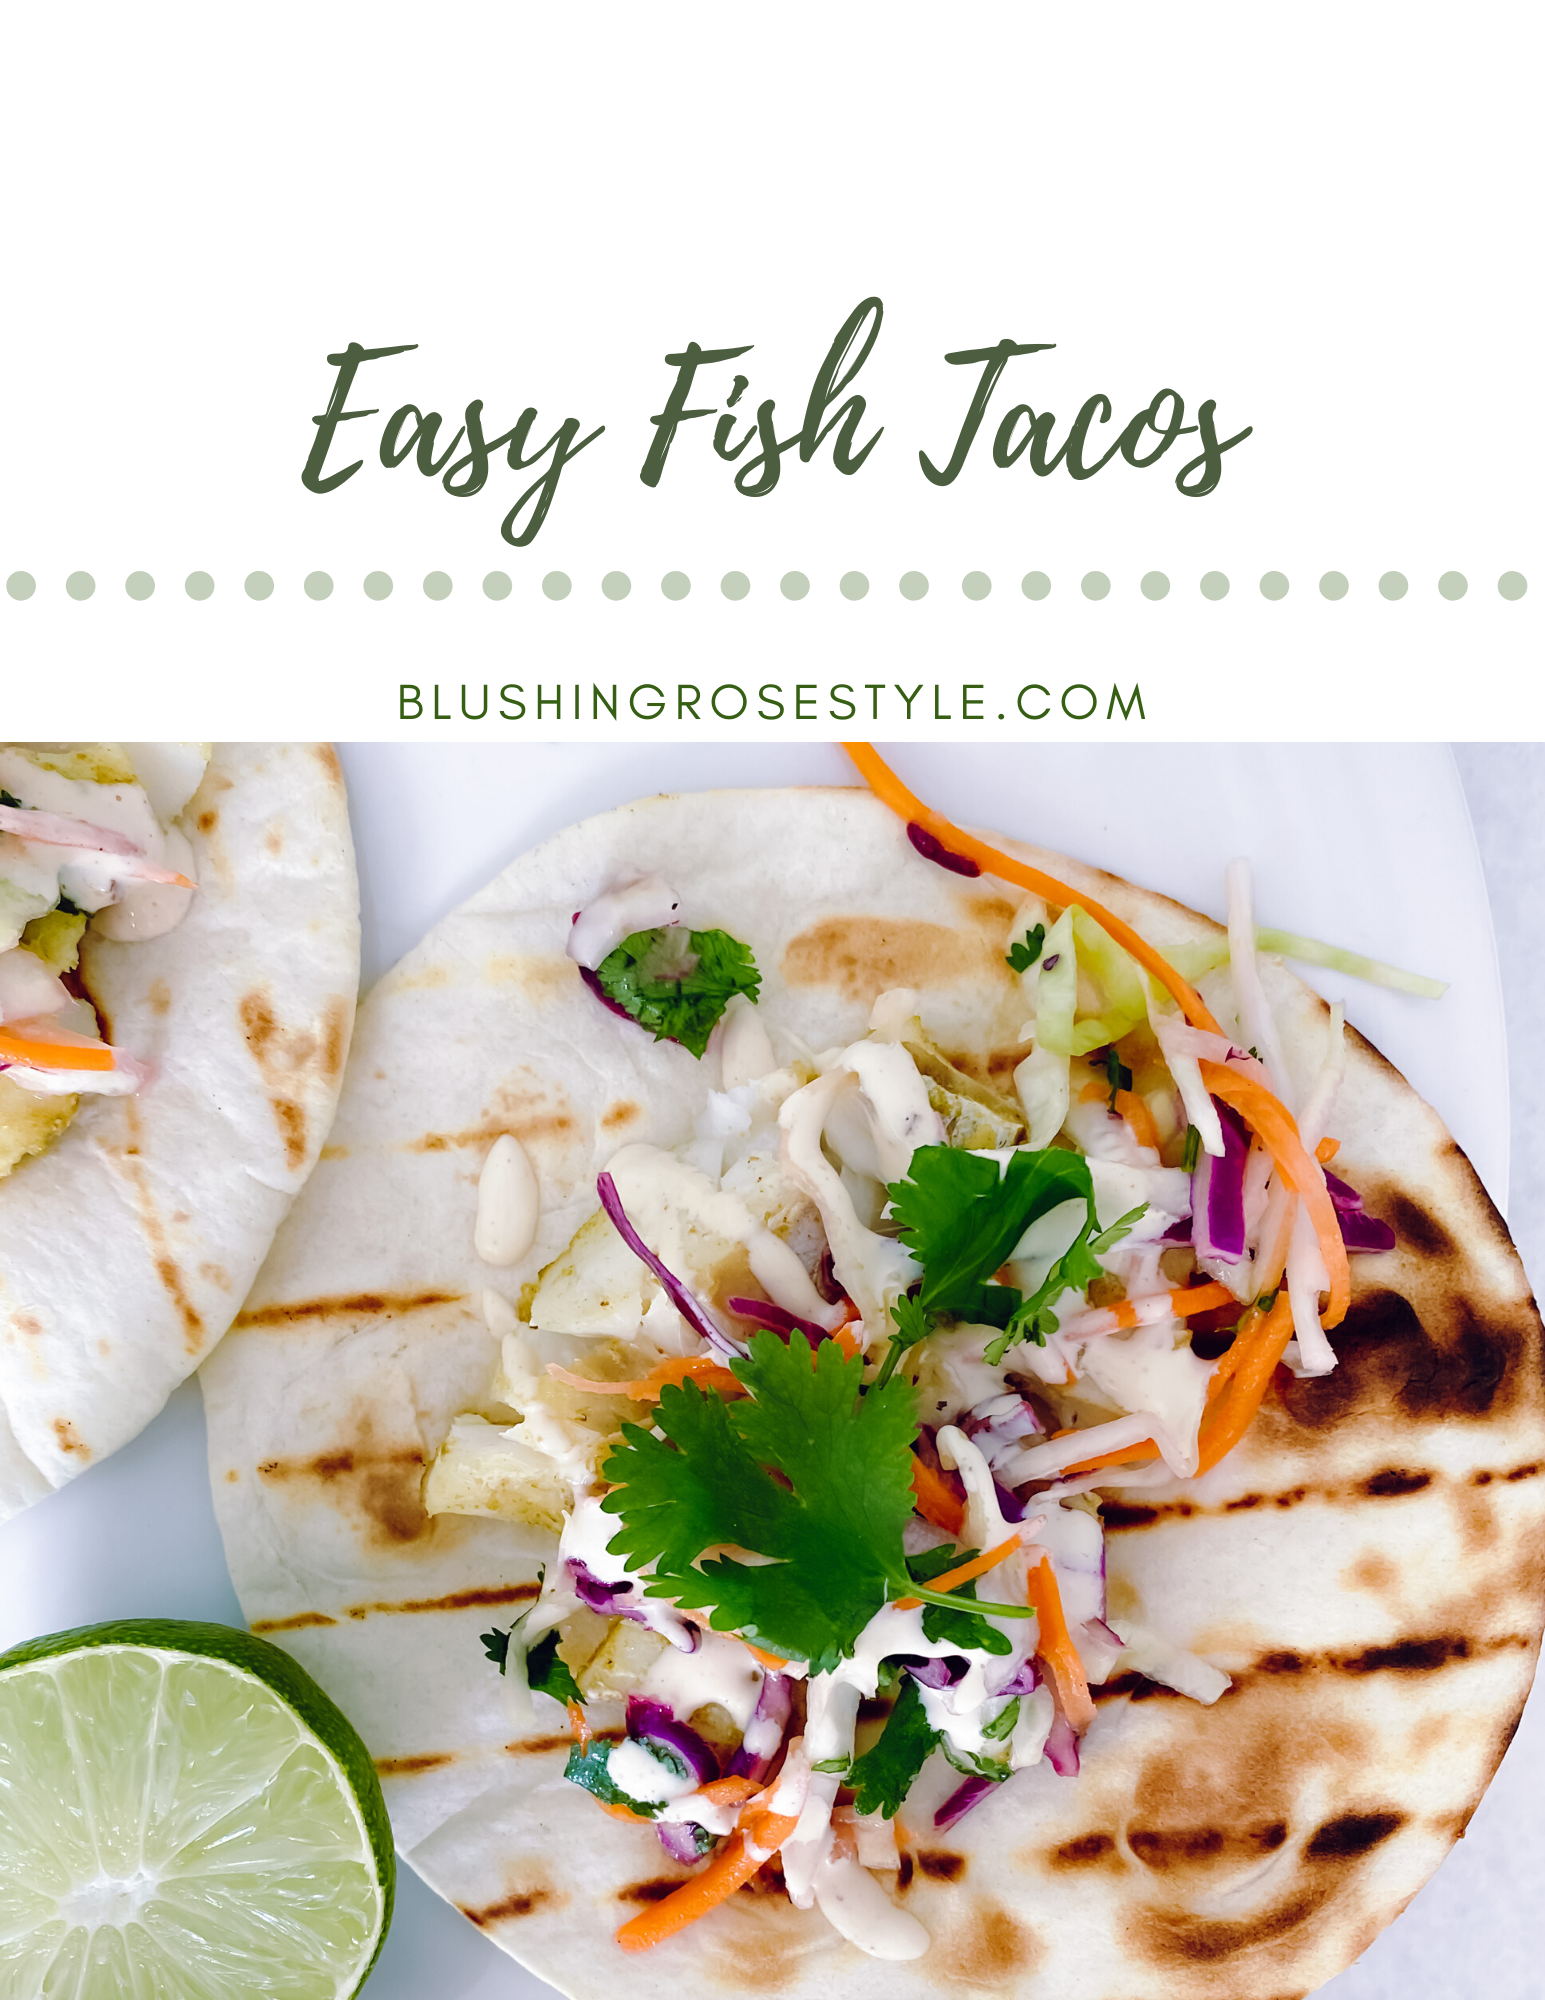 Easy Fish Tacos